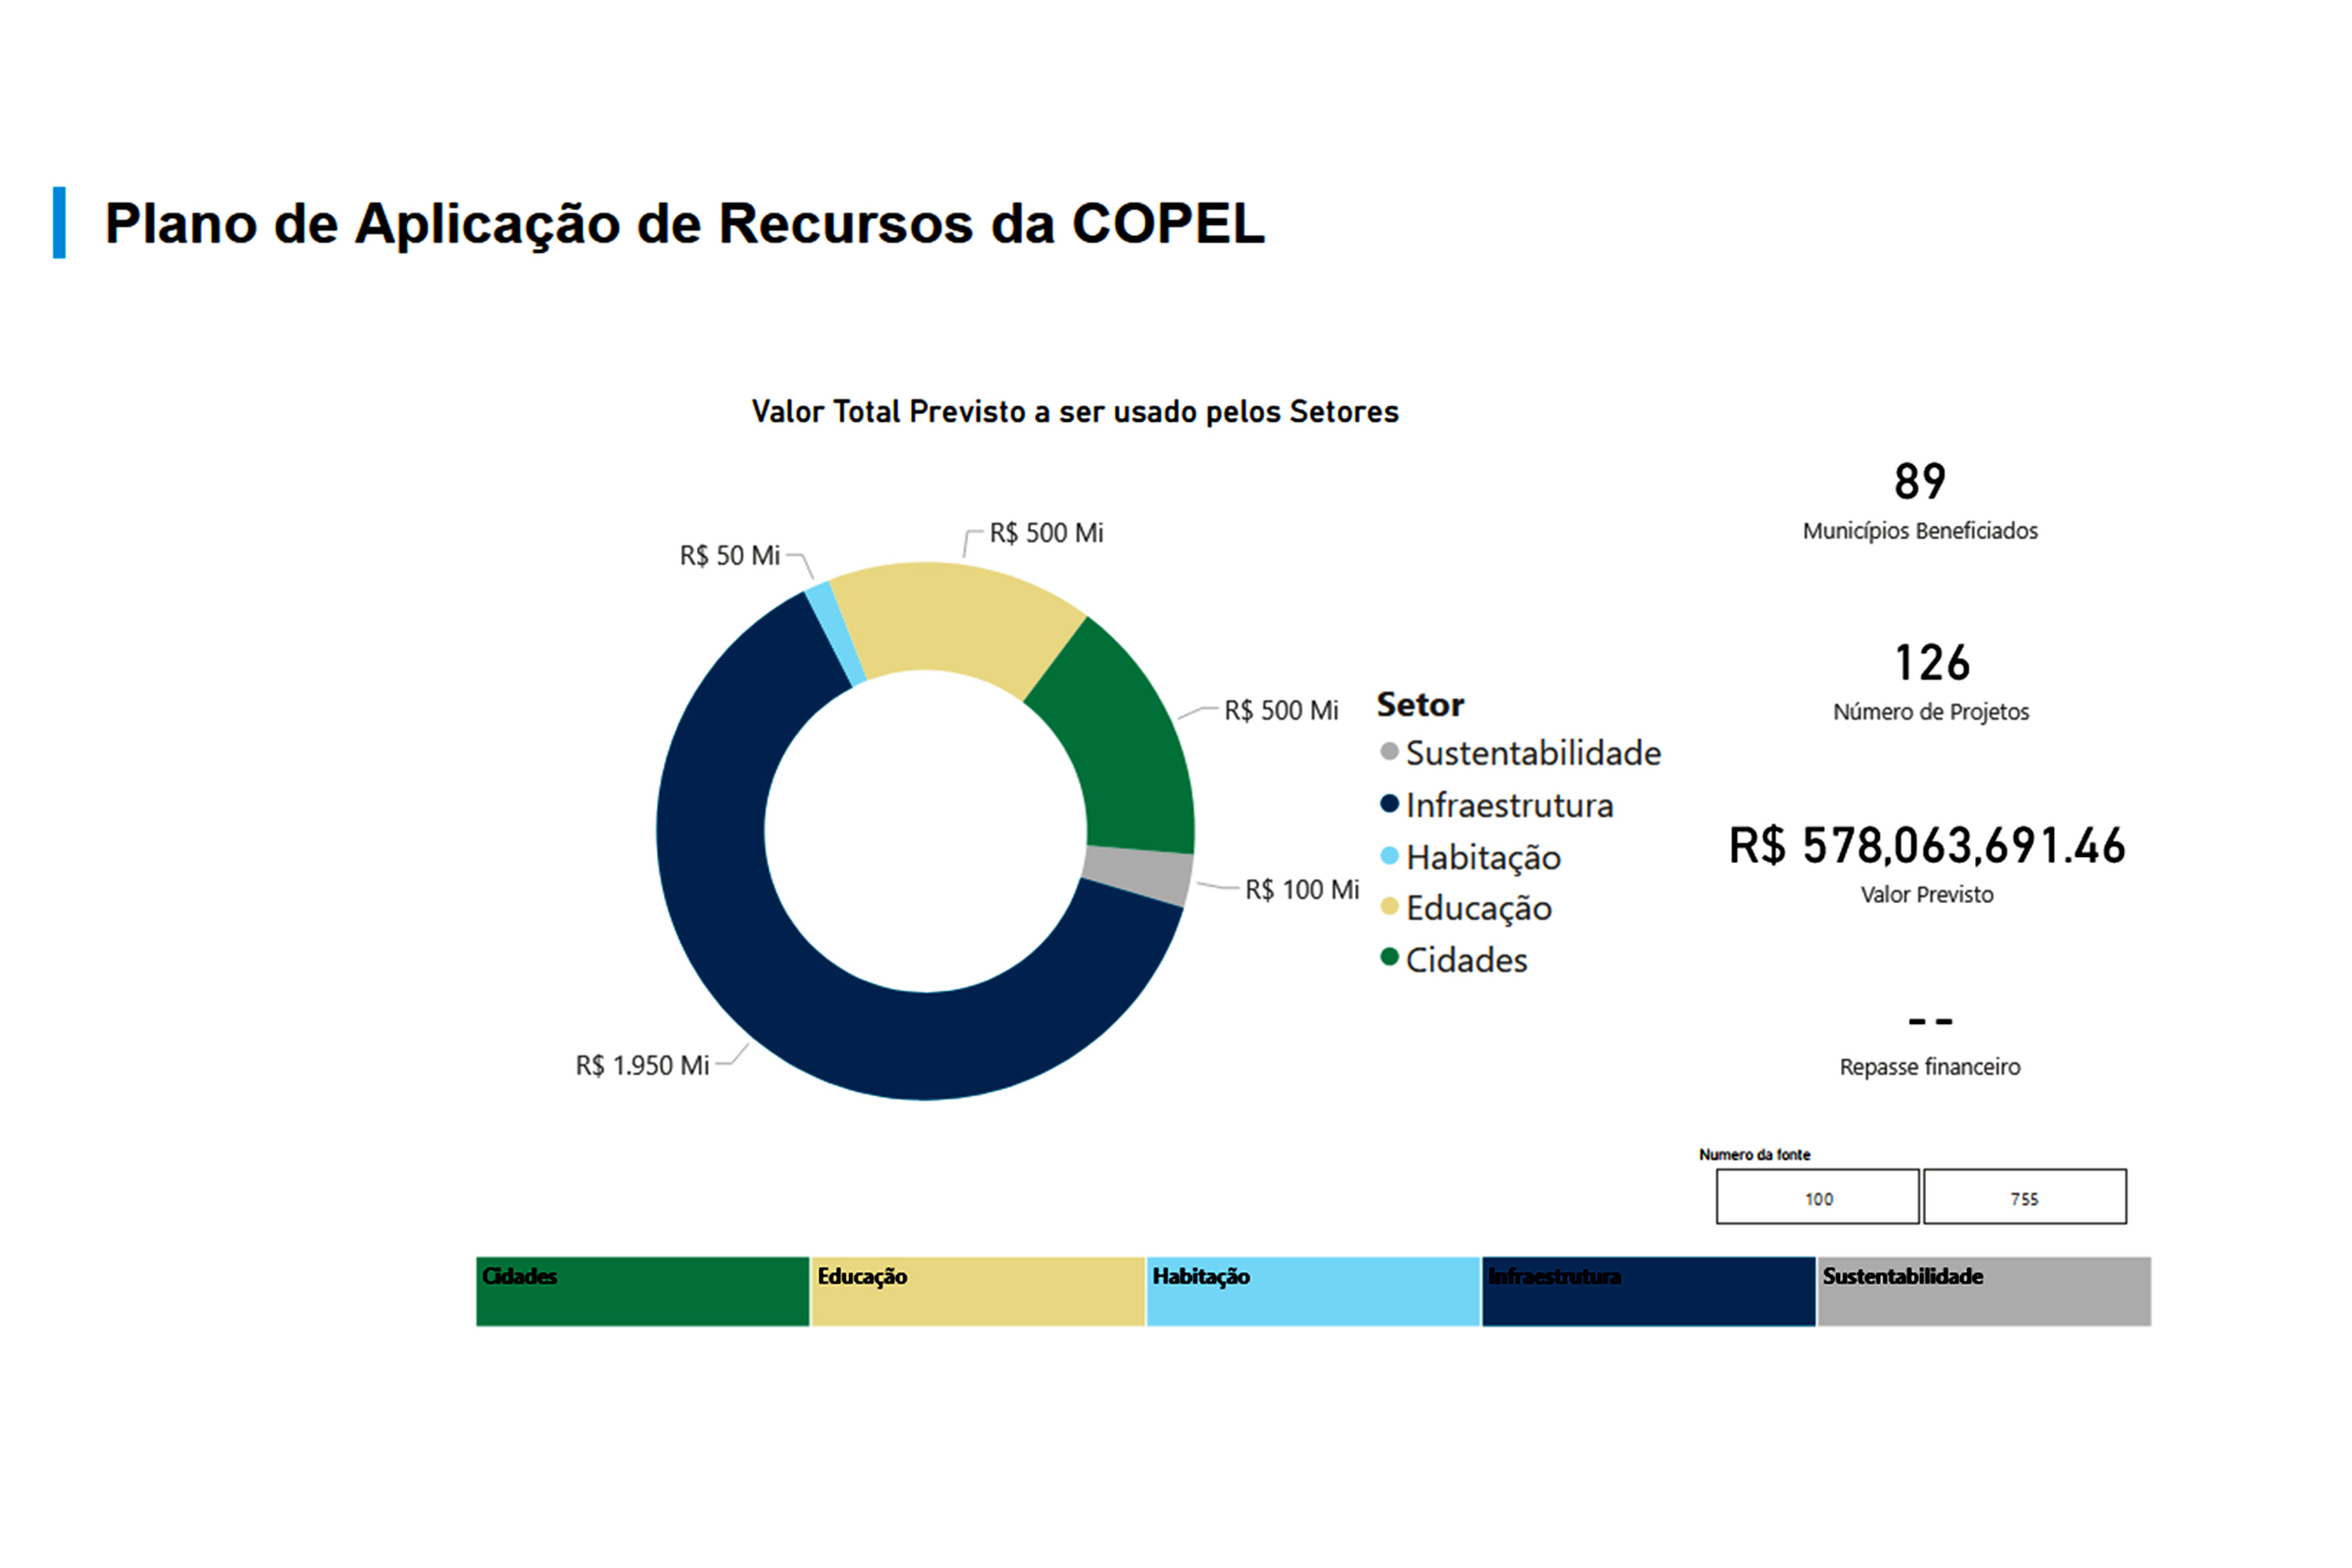 Institucional - Copel  Companhia Paranaense de Energia